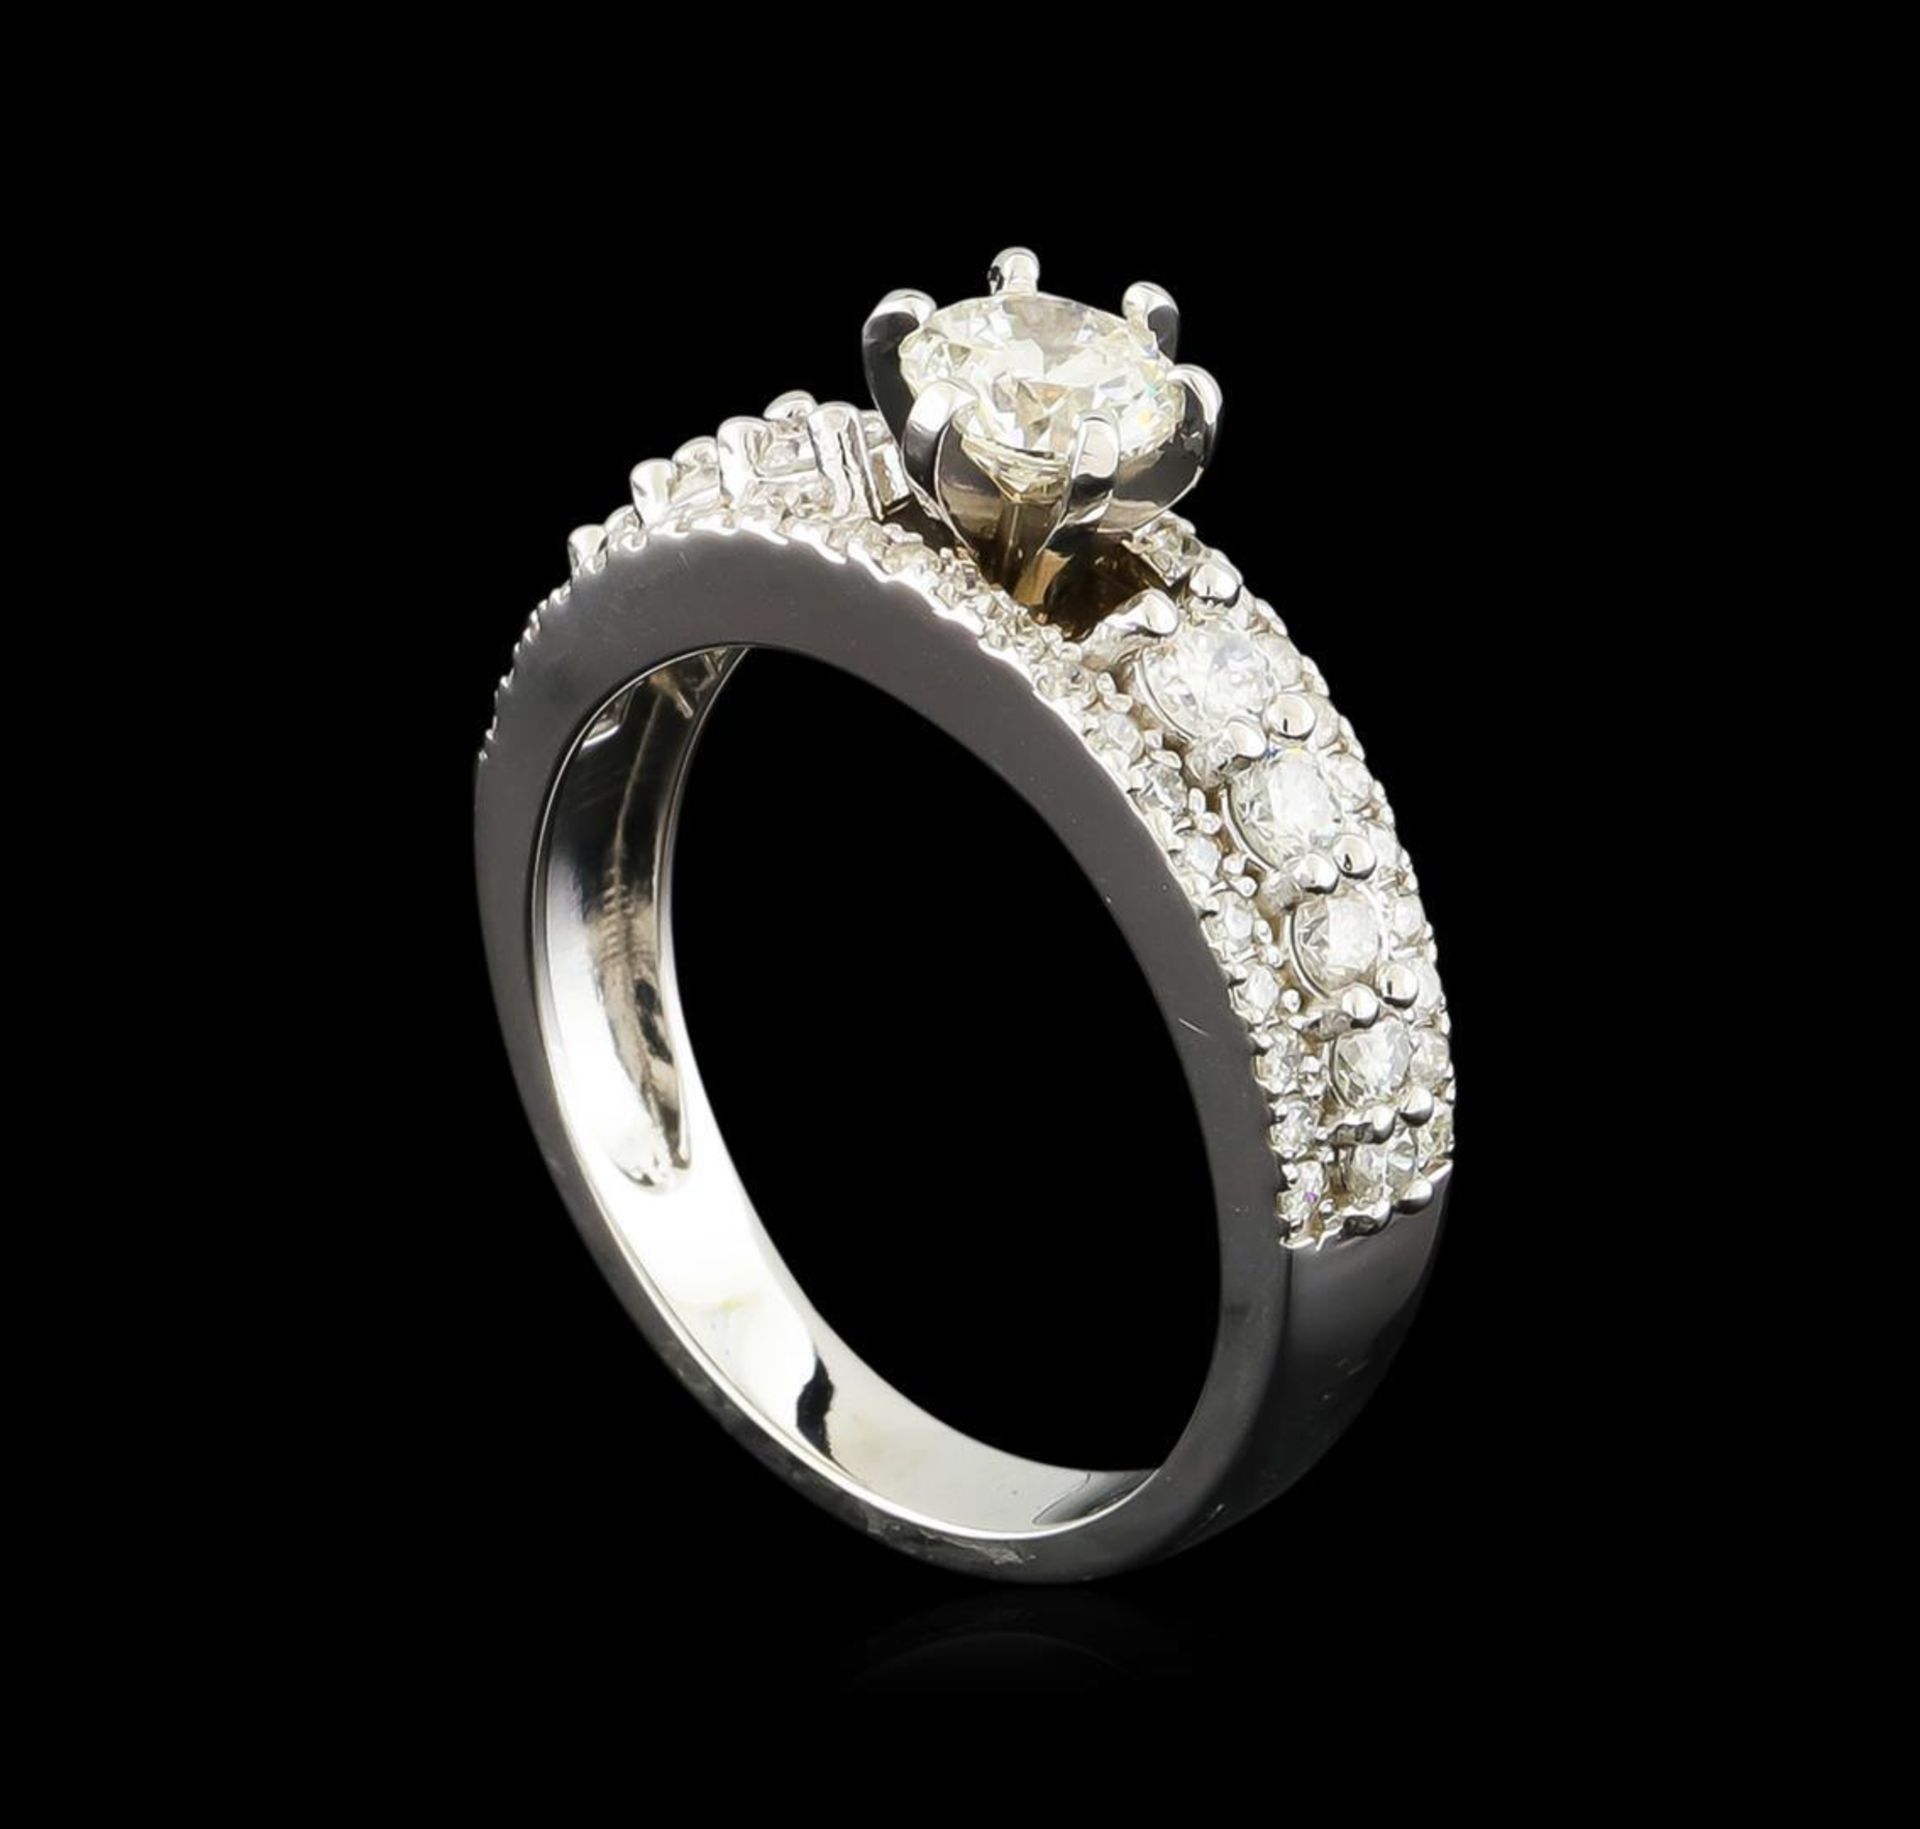 1.25 ctw Diamond Ring - 14KT White Gold - Image 4 of 5